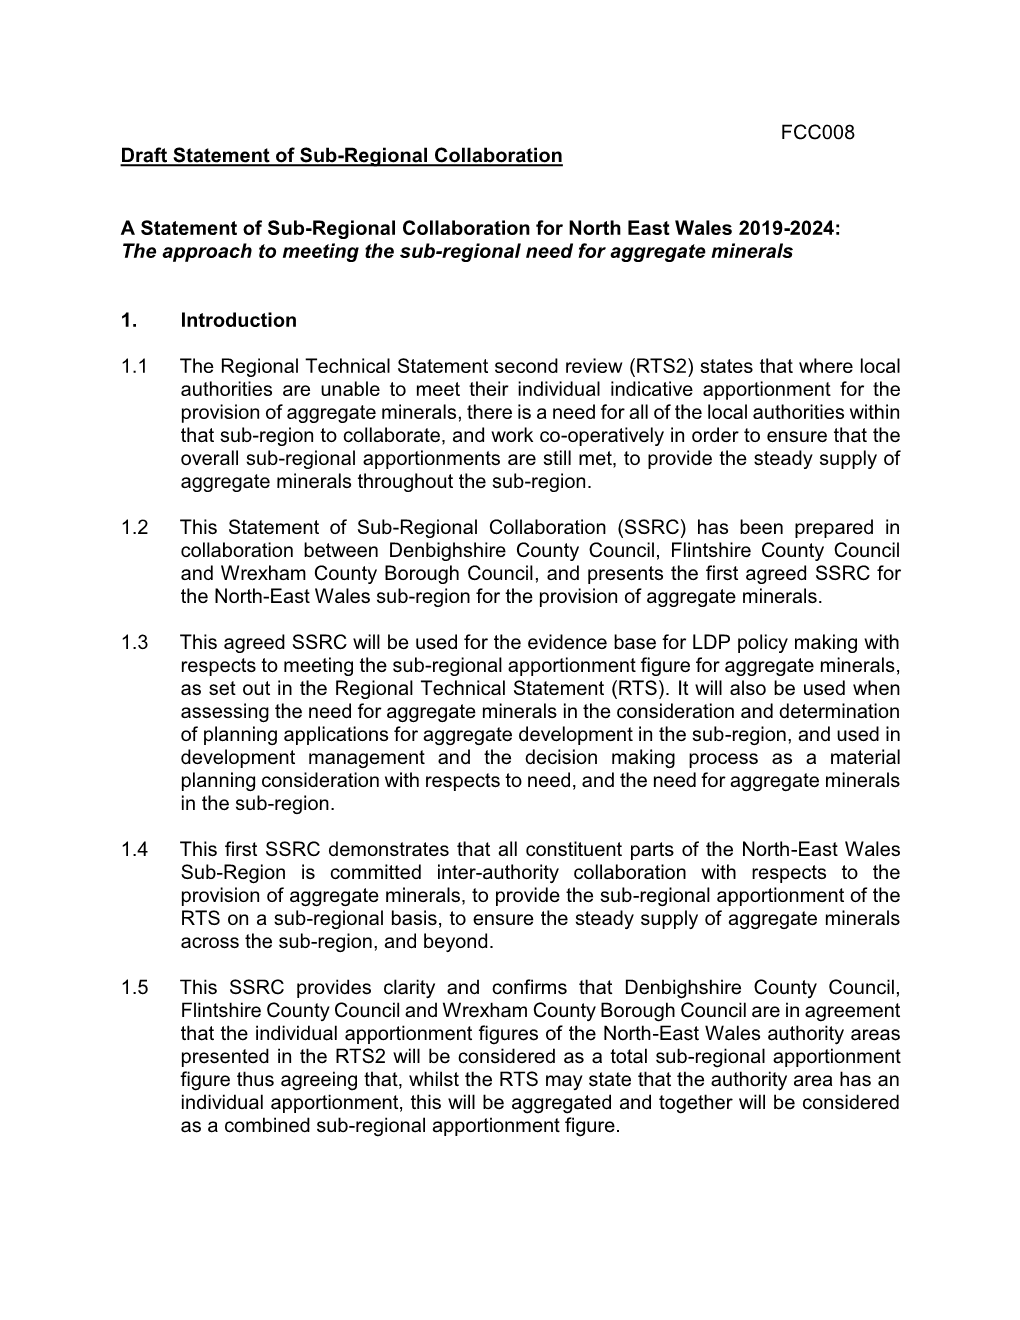 FCC008 Draft Statement of Sub-Regional Collaboration